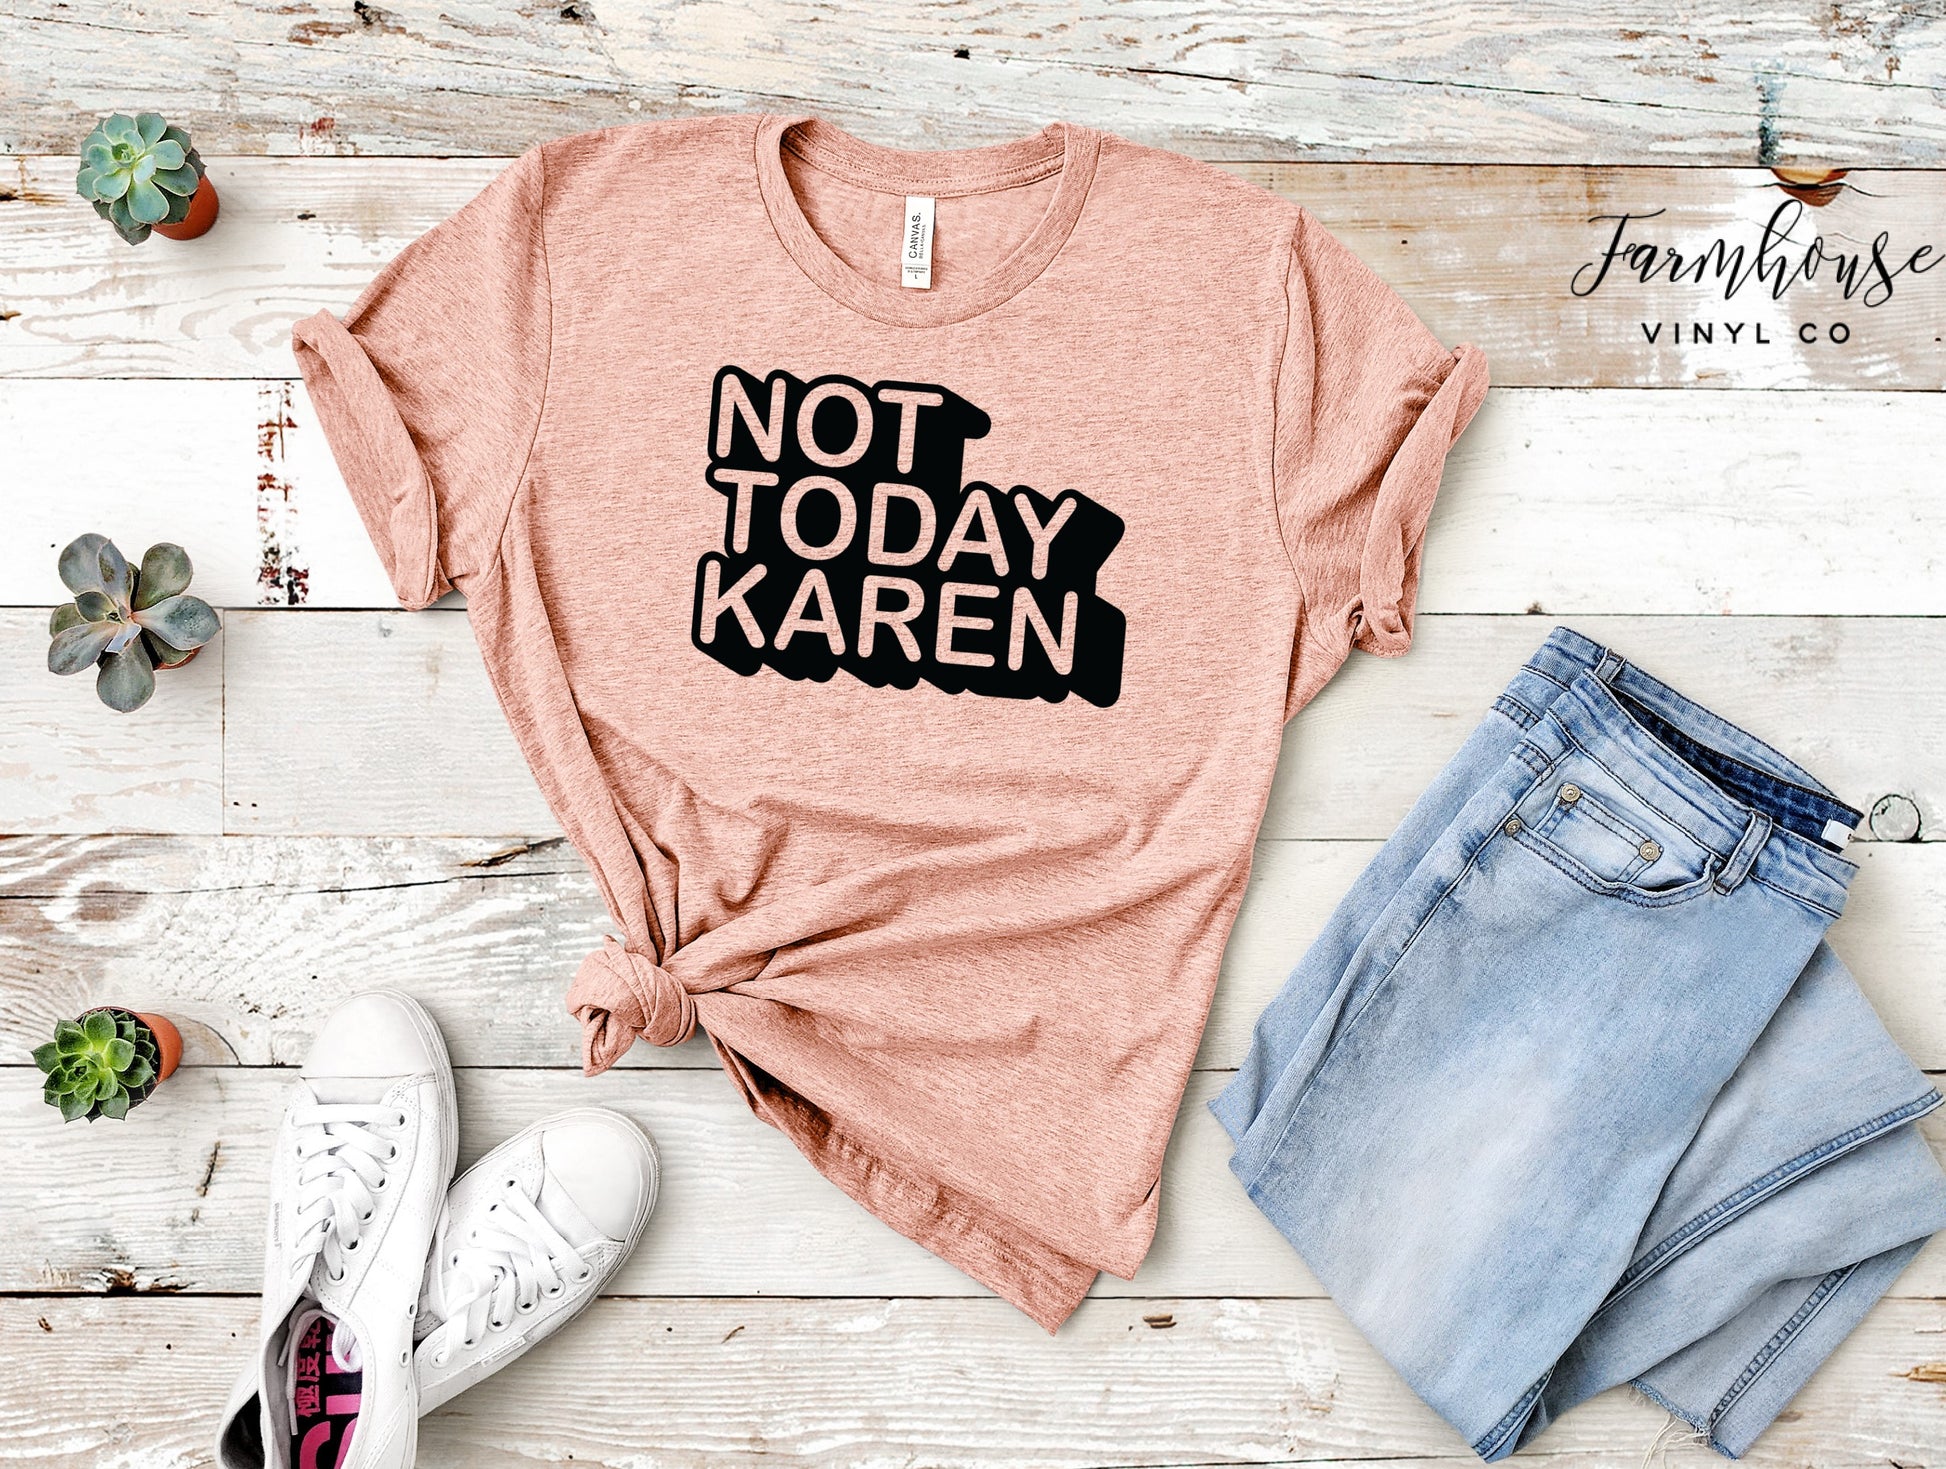 Not Today Karen Shirt - Farmhouse Vinyl Co